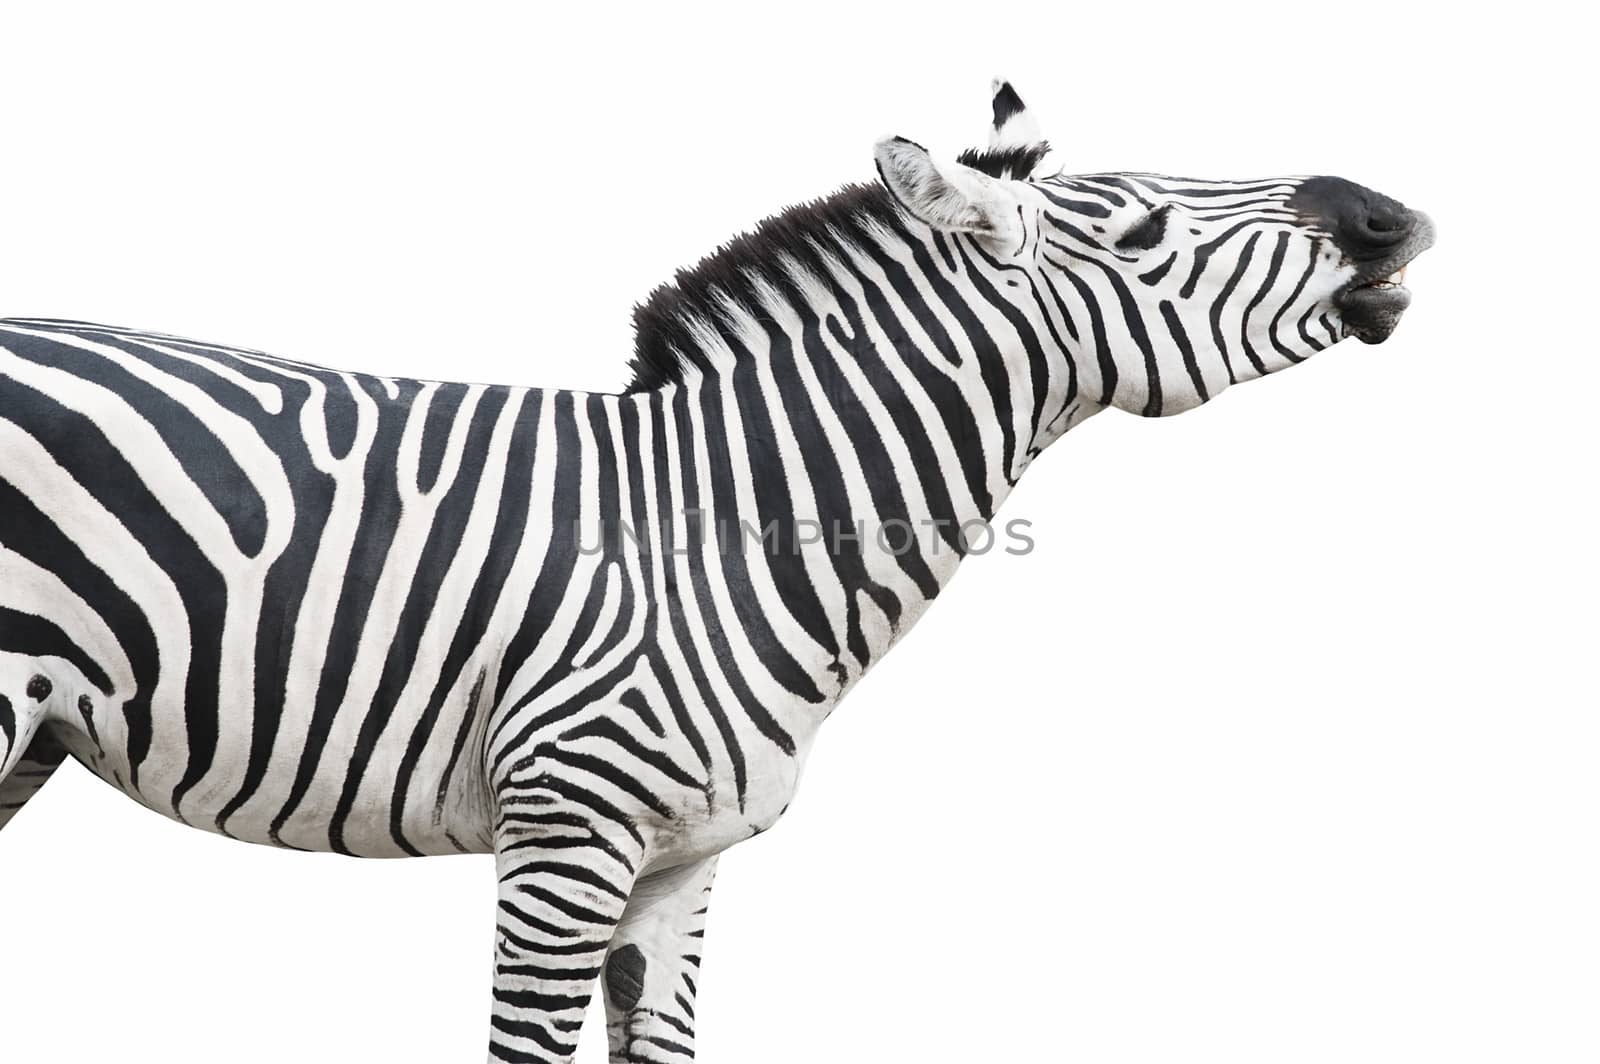 Zebra singing isolated over white background by vkstudio